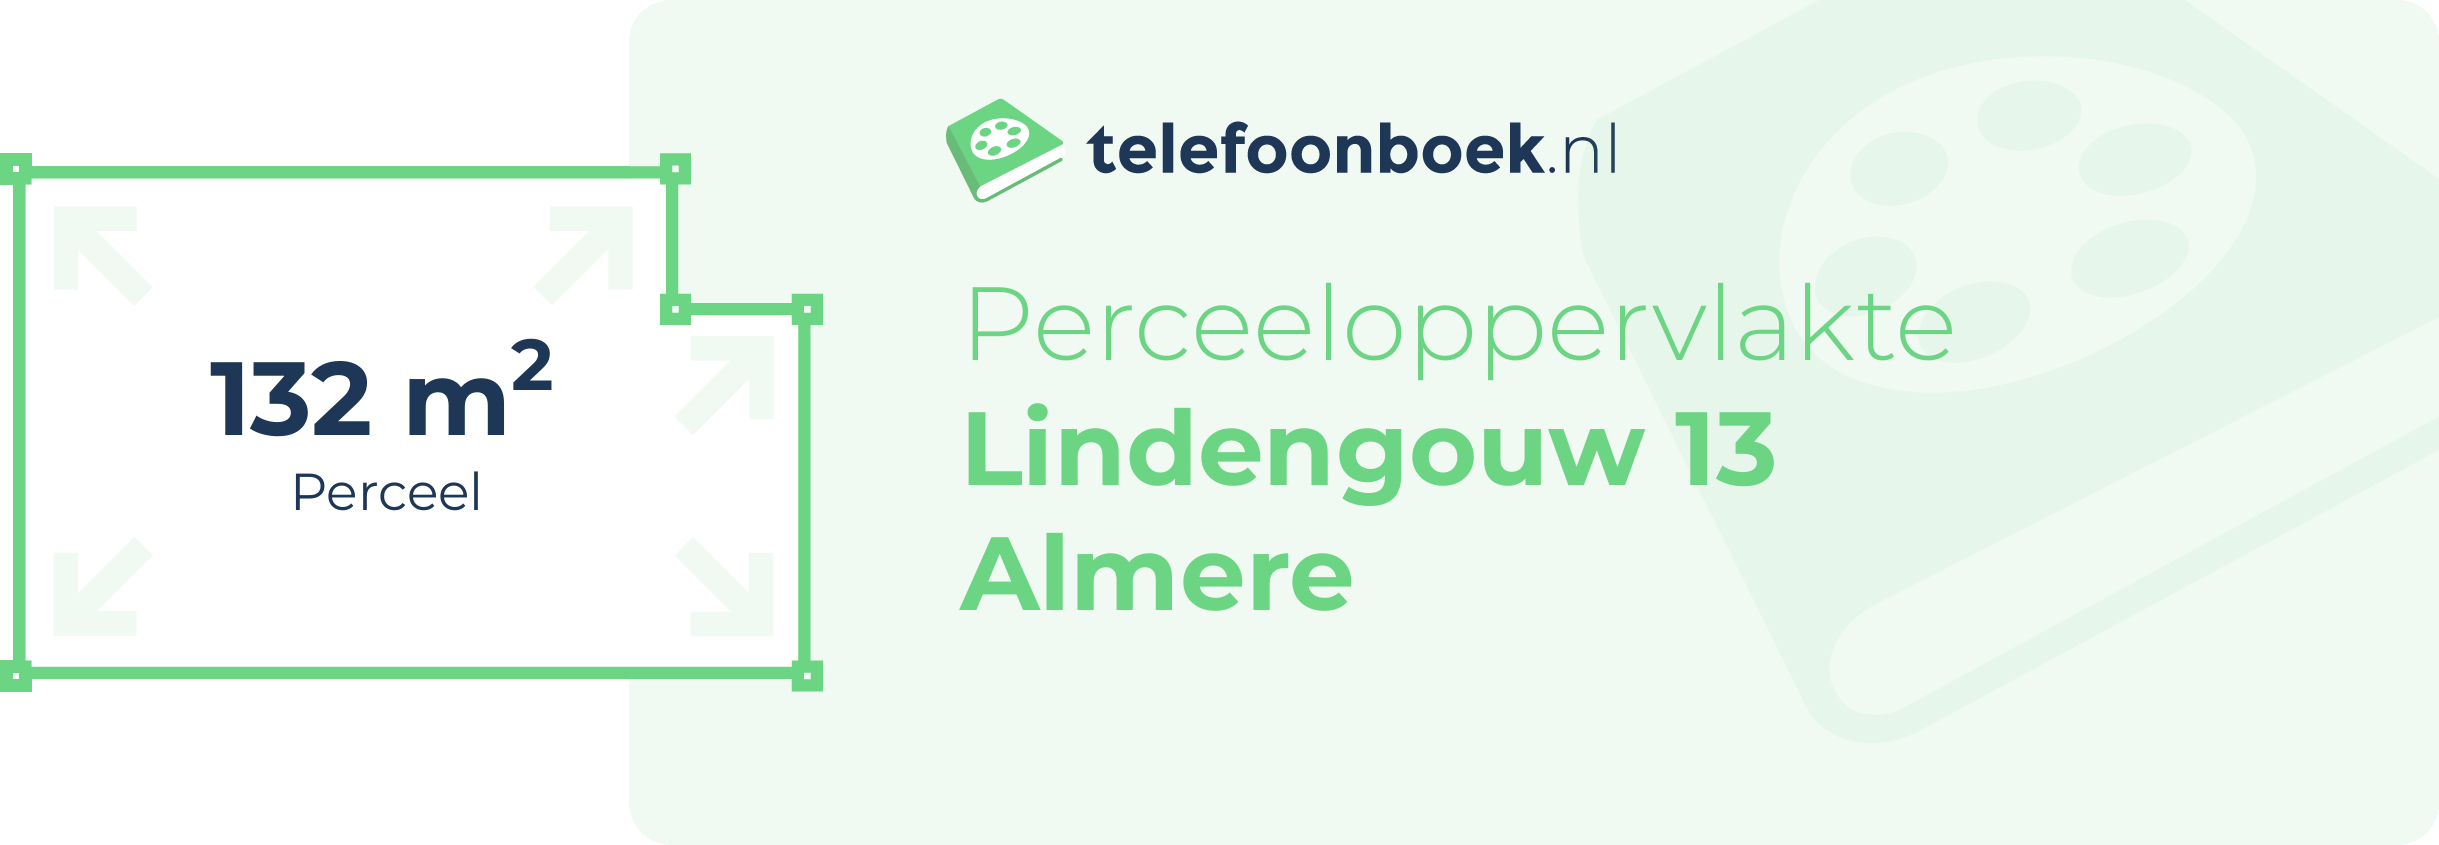 Perceeloppervlakte Lindengouw 13 Almere